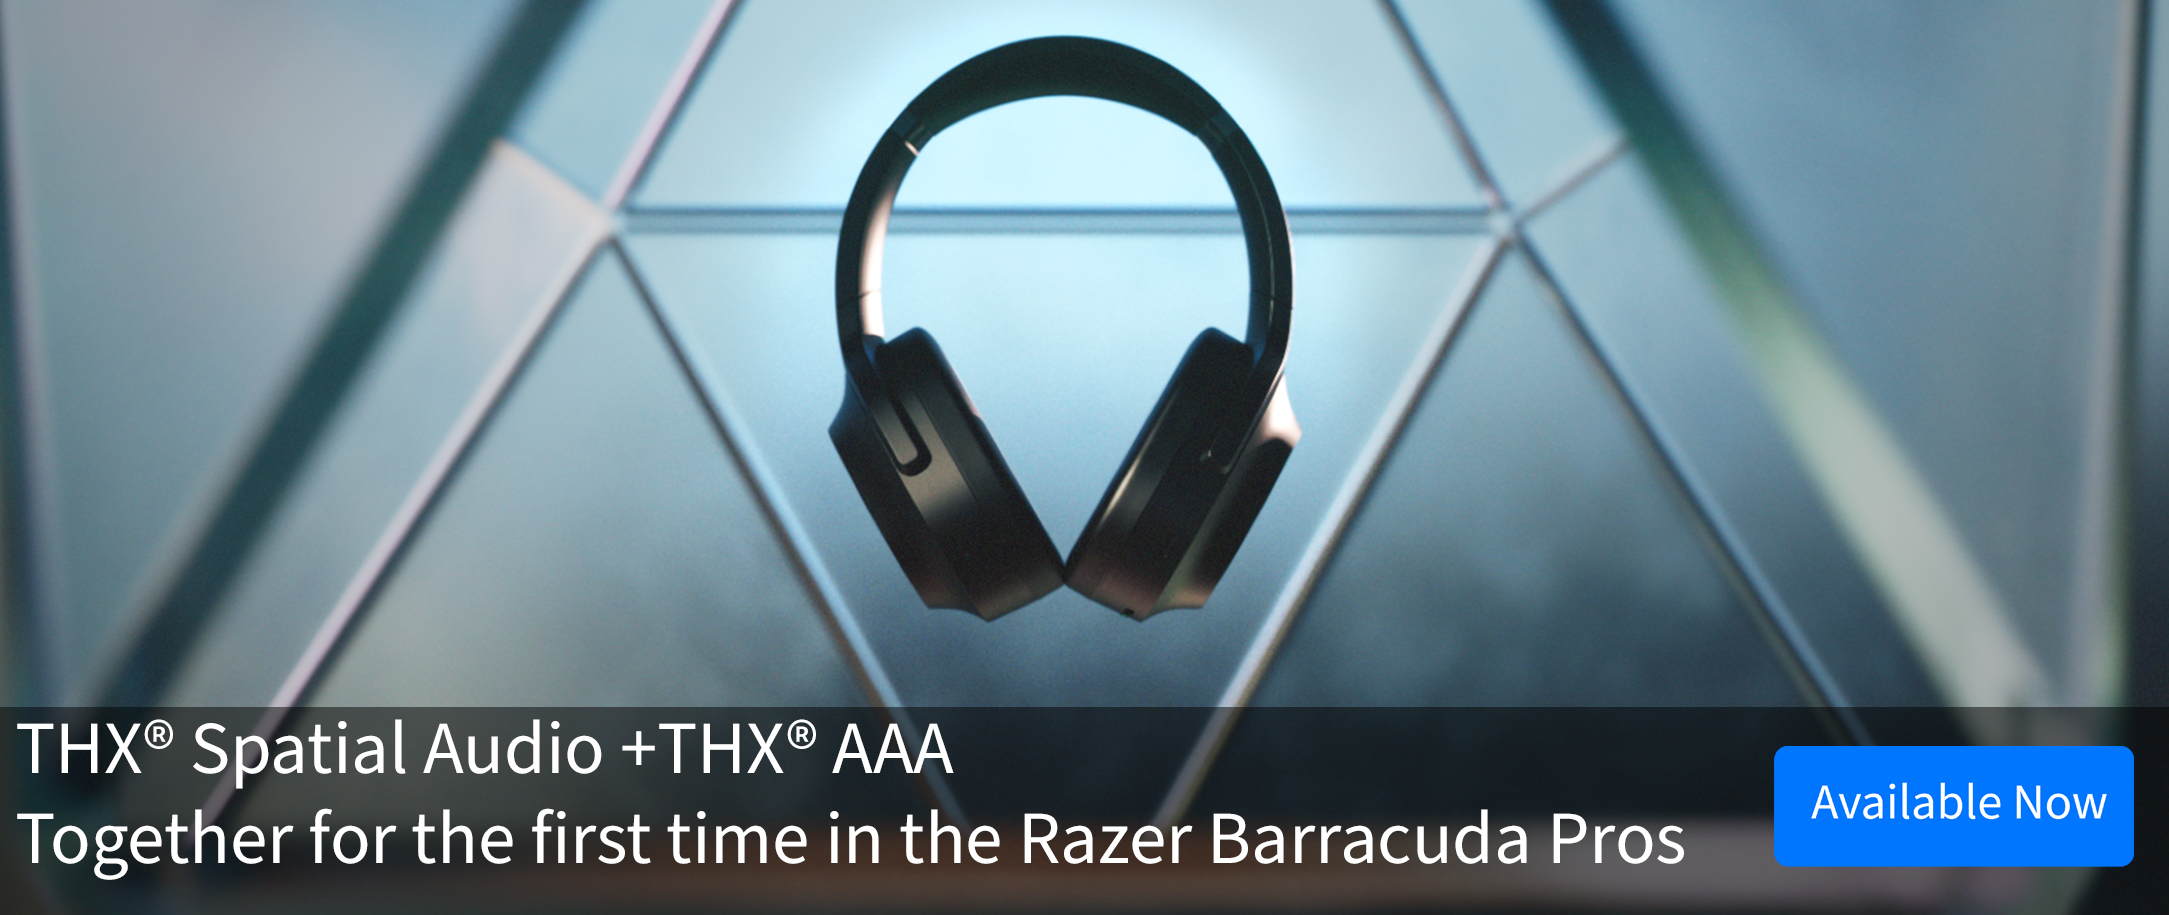 Razer Barracuda headphones